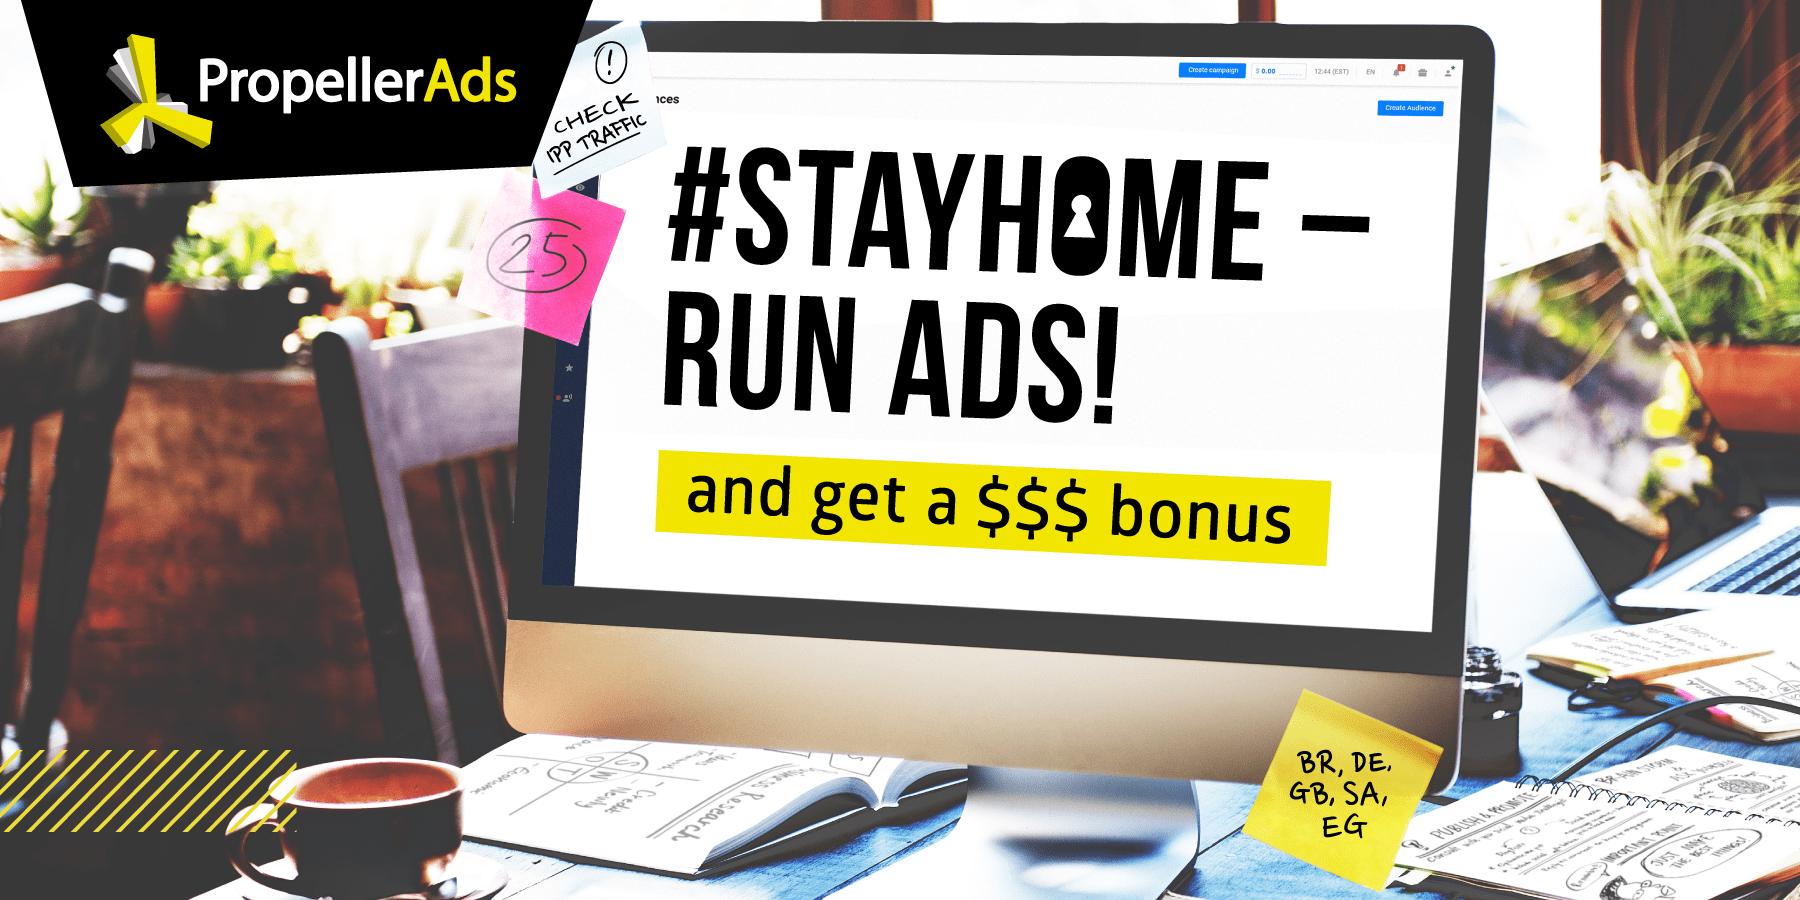 Stay_home - run ads